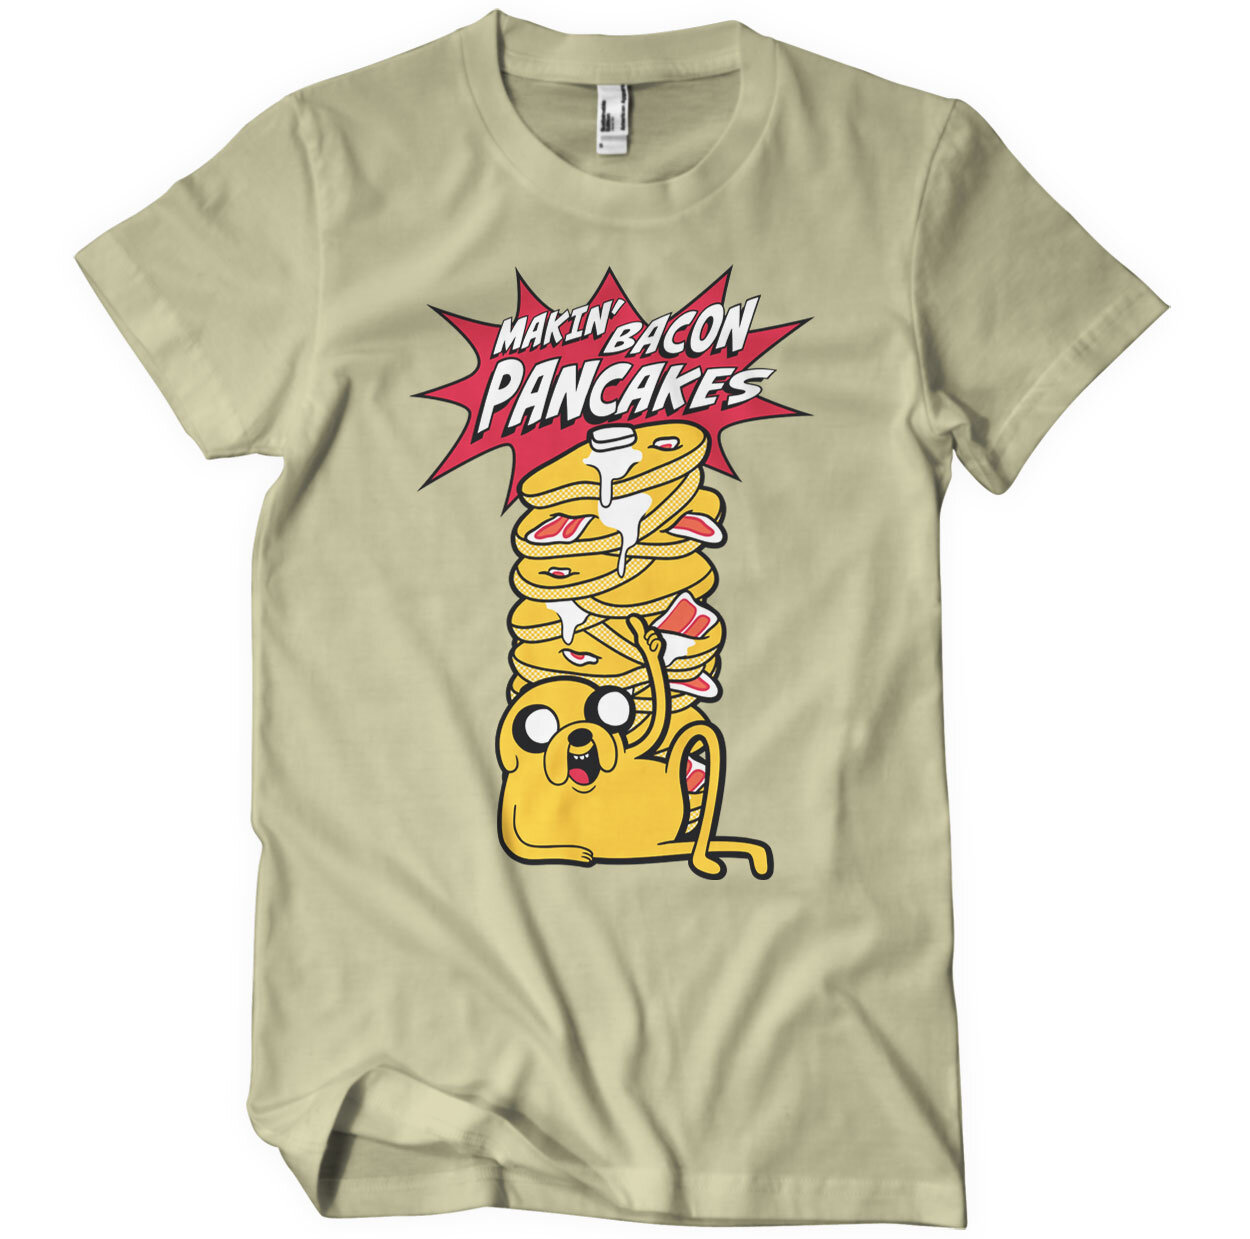 Adventure Time / Jake The Dog - Makin' Bacon Pancakes Kids T-Shirt -  Shirtstore